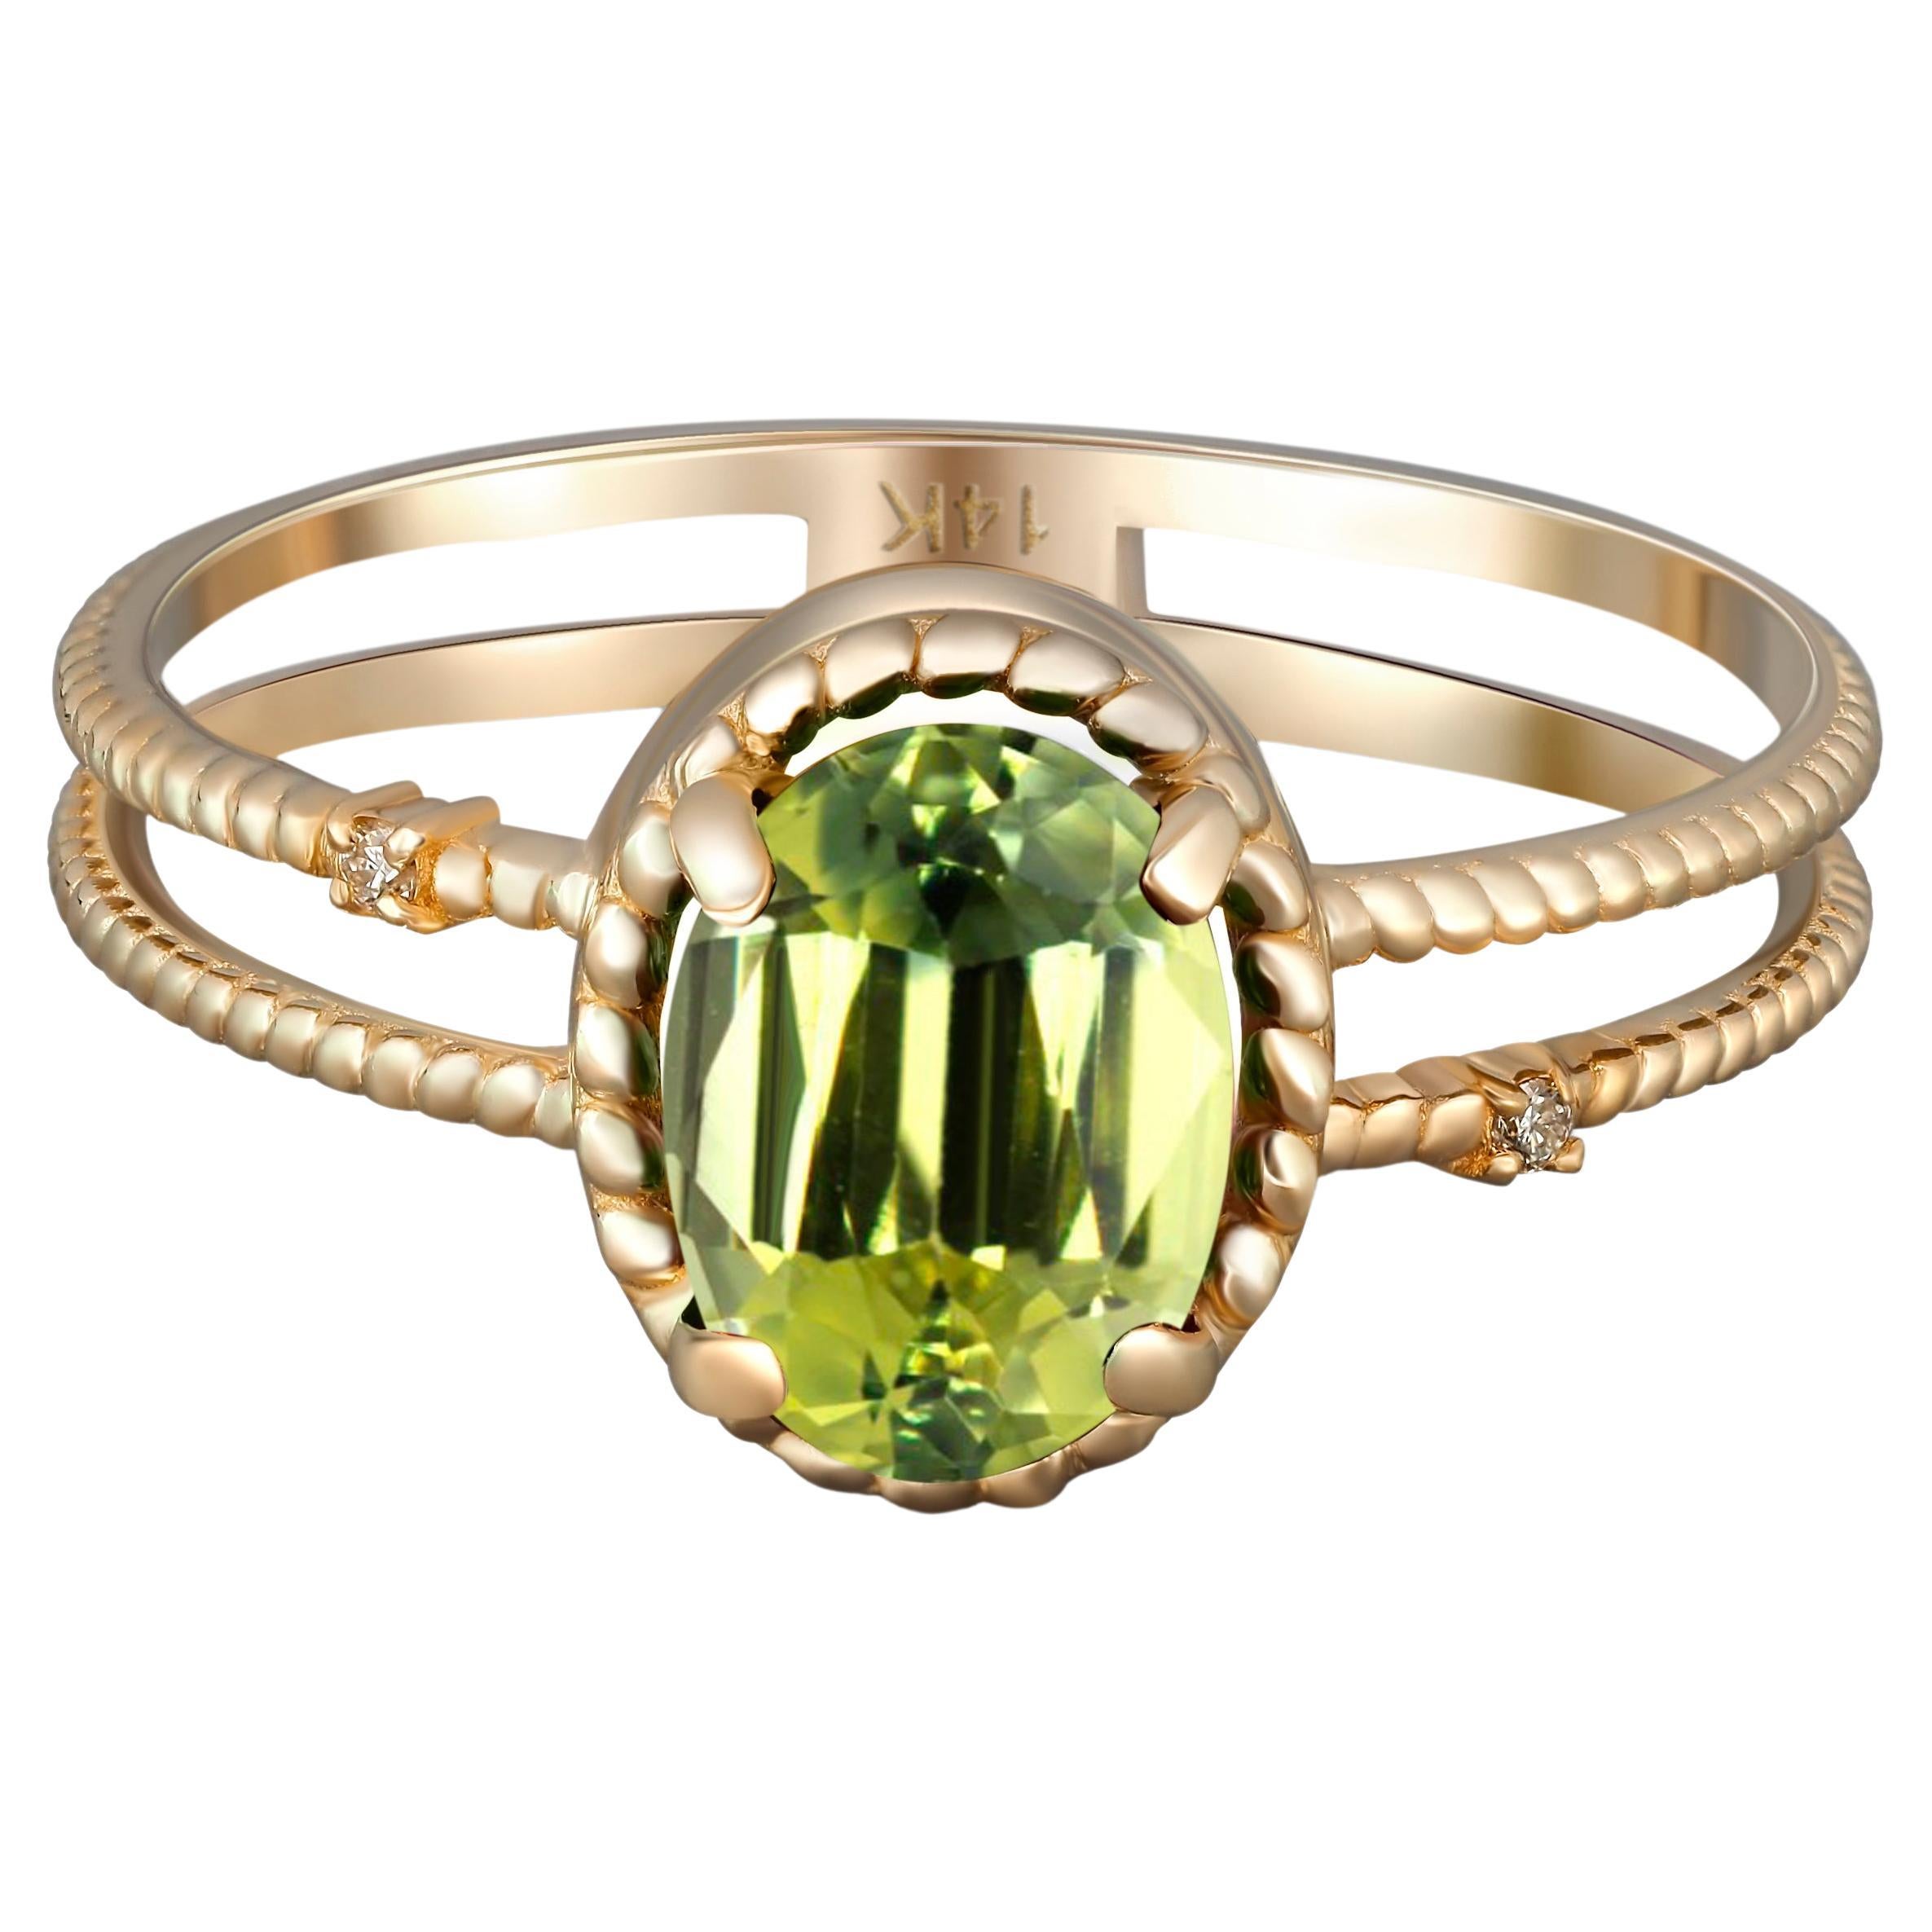 Oval Peridot Ring, 14k Gold Ring with Peridot, Minimalist Peridot Ring For Sale